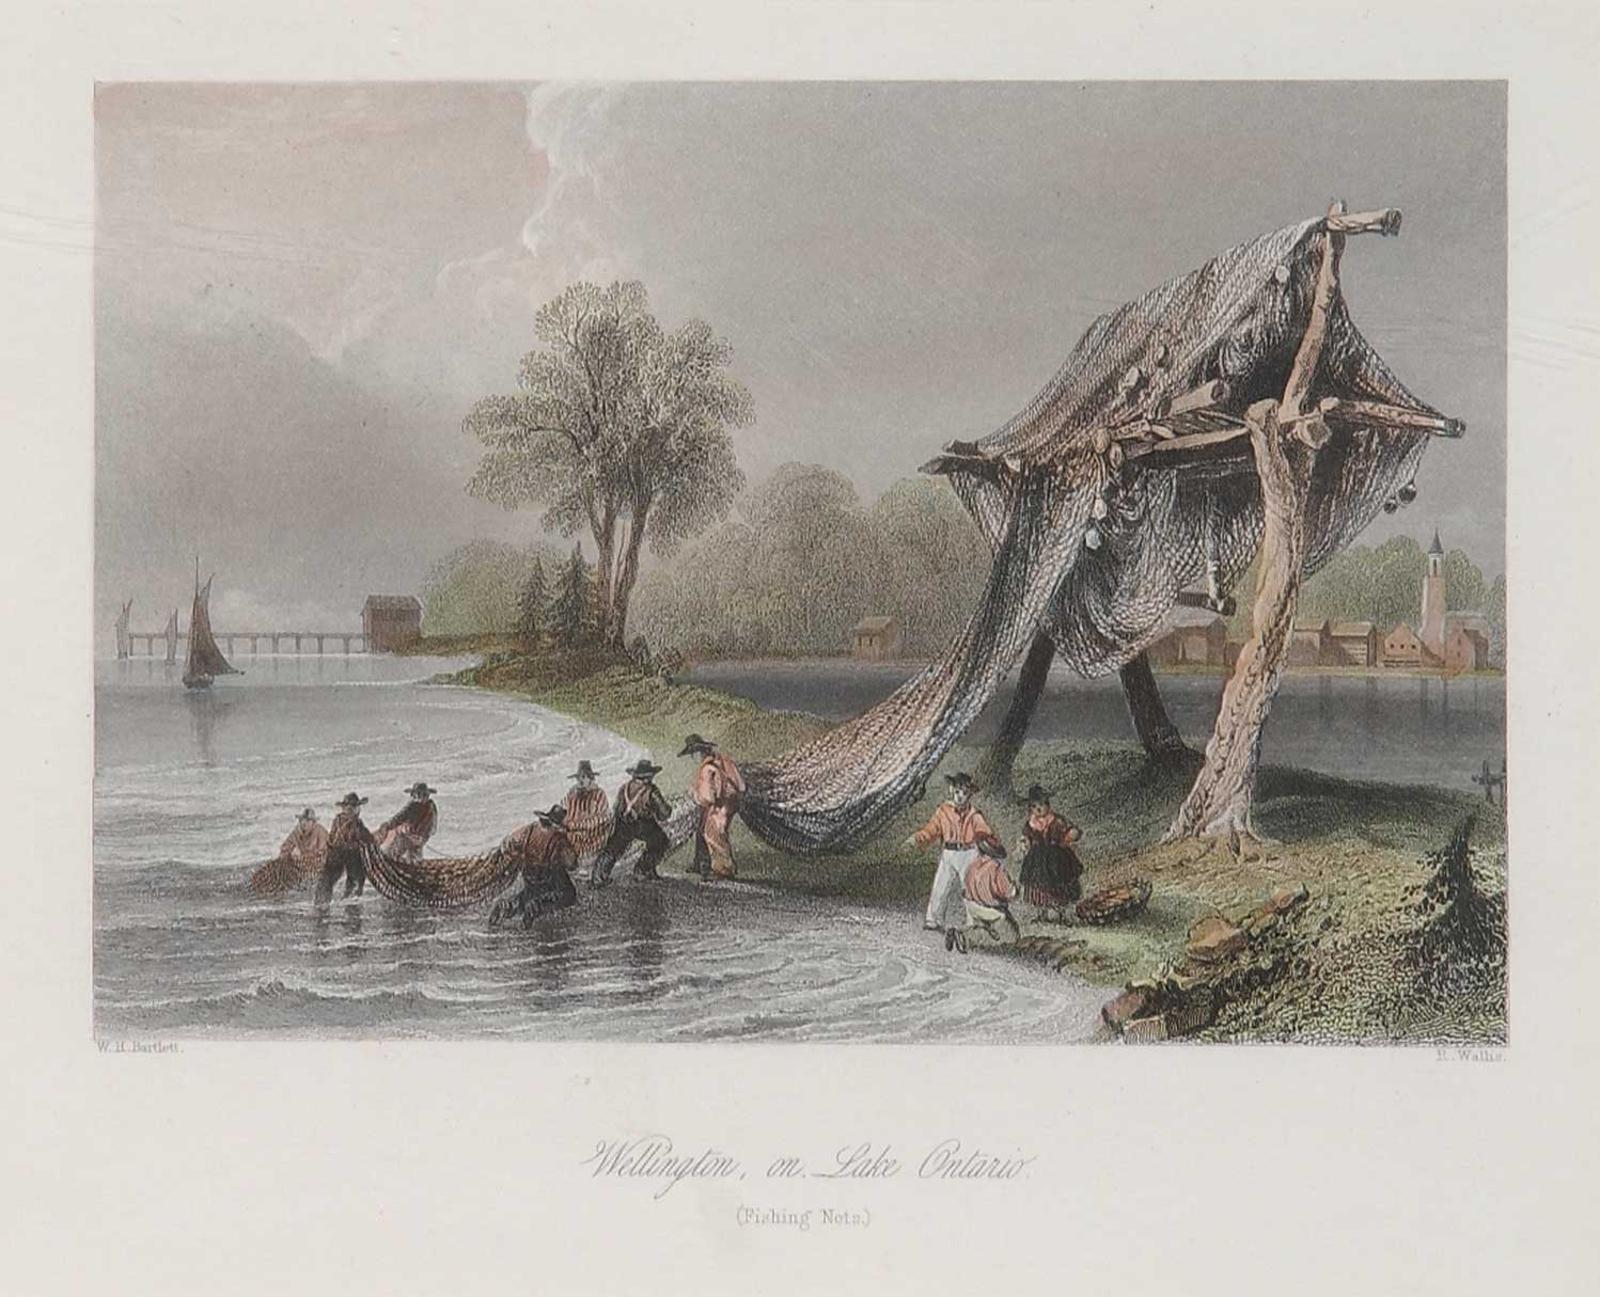 William Henry Bartlett (1809-1854) - Wellington, on Lake Ontario - Fishing Nets